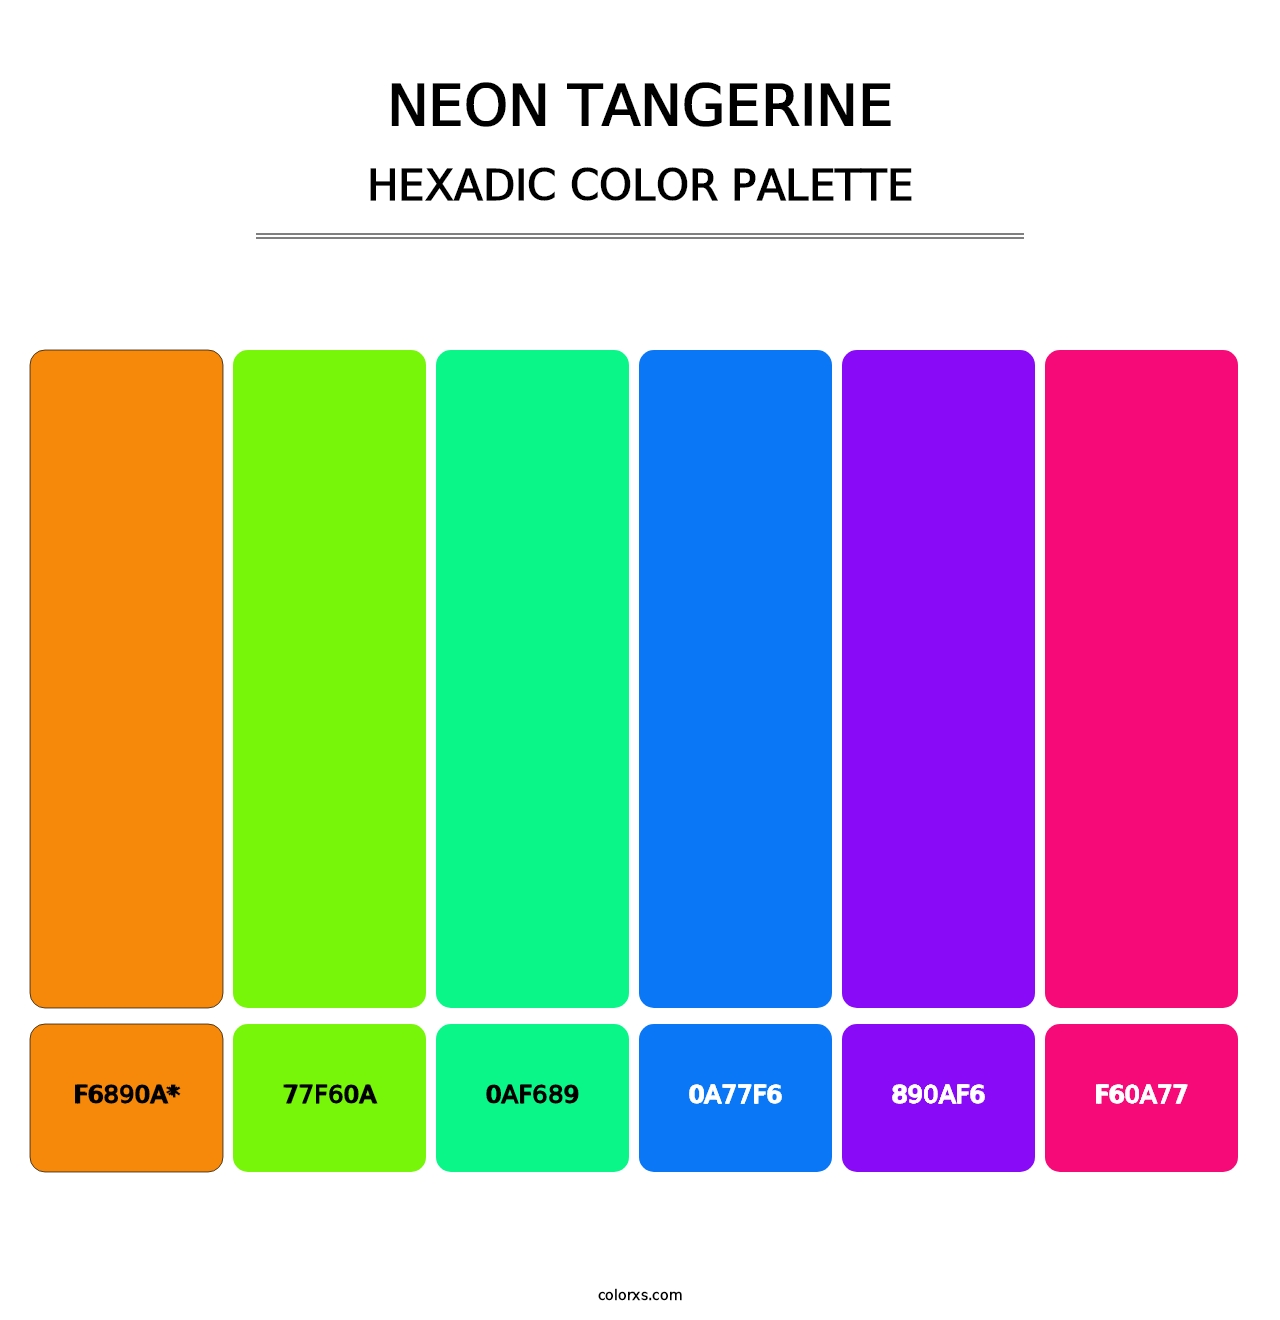 Neon Tangerine - Hexadic Color Palette